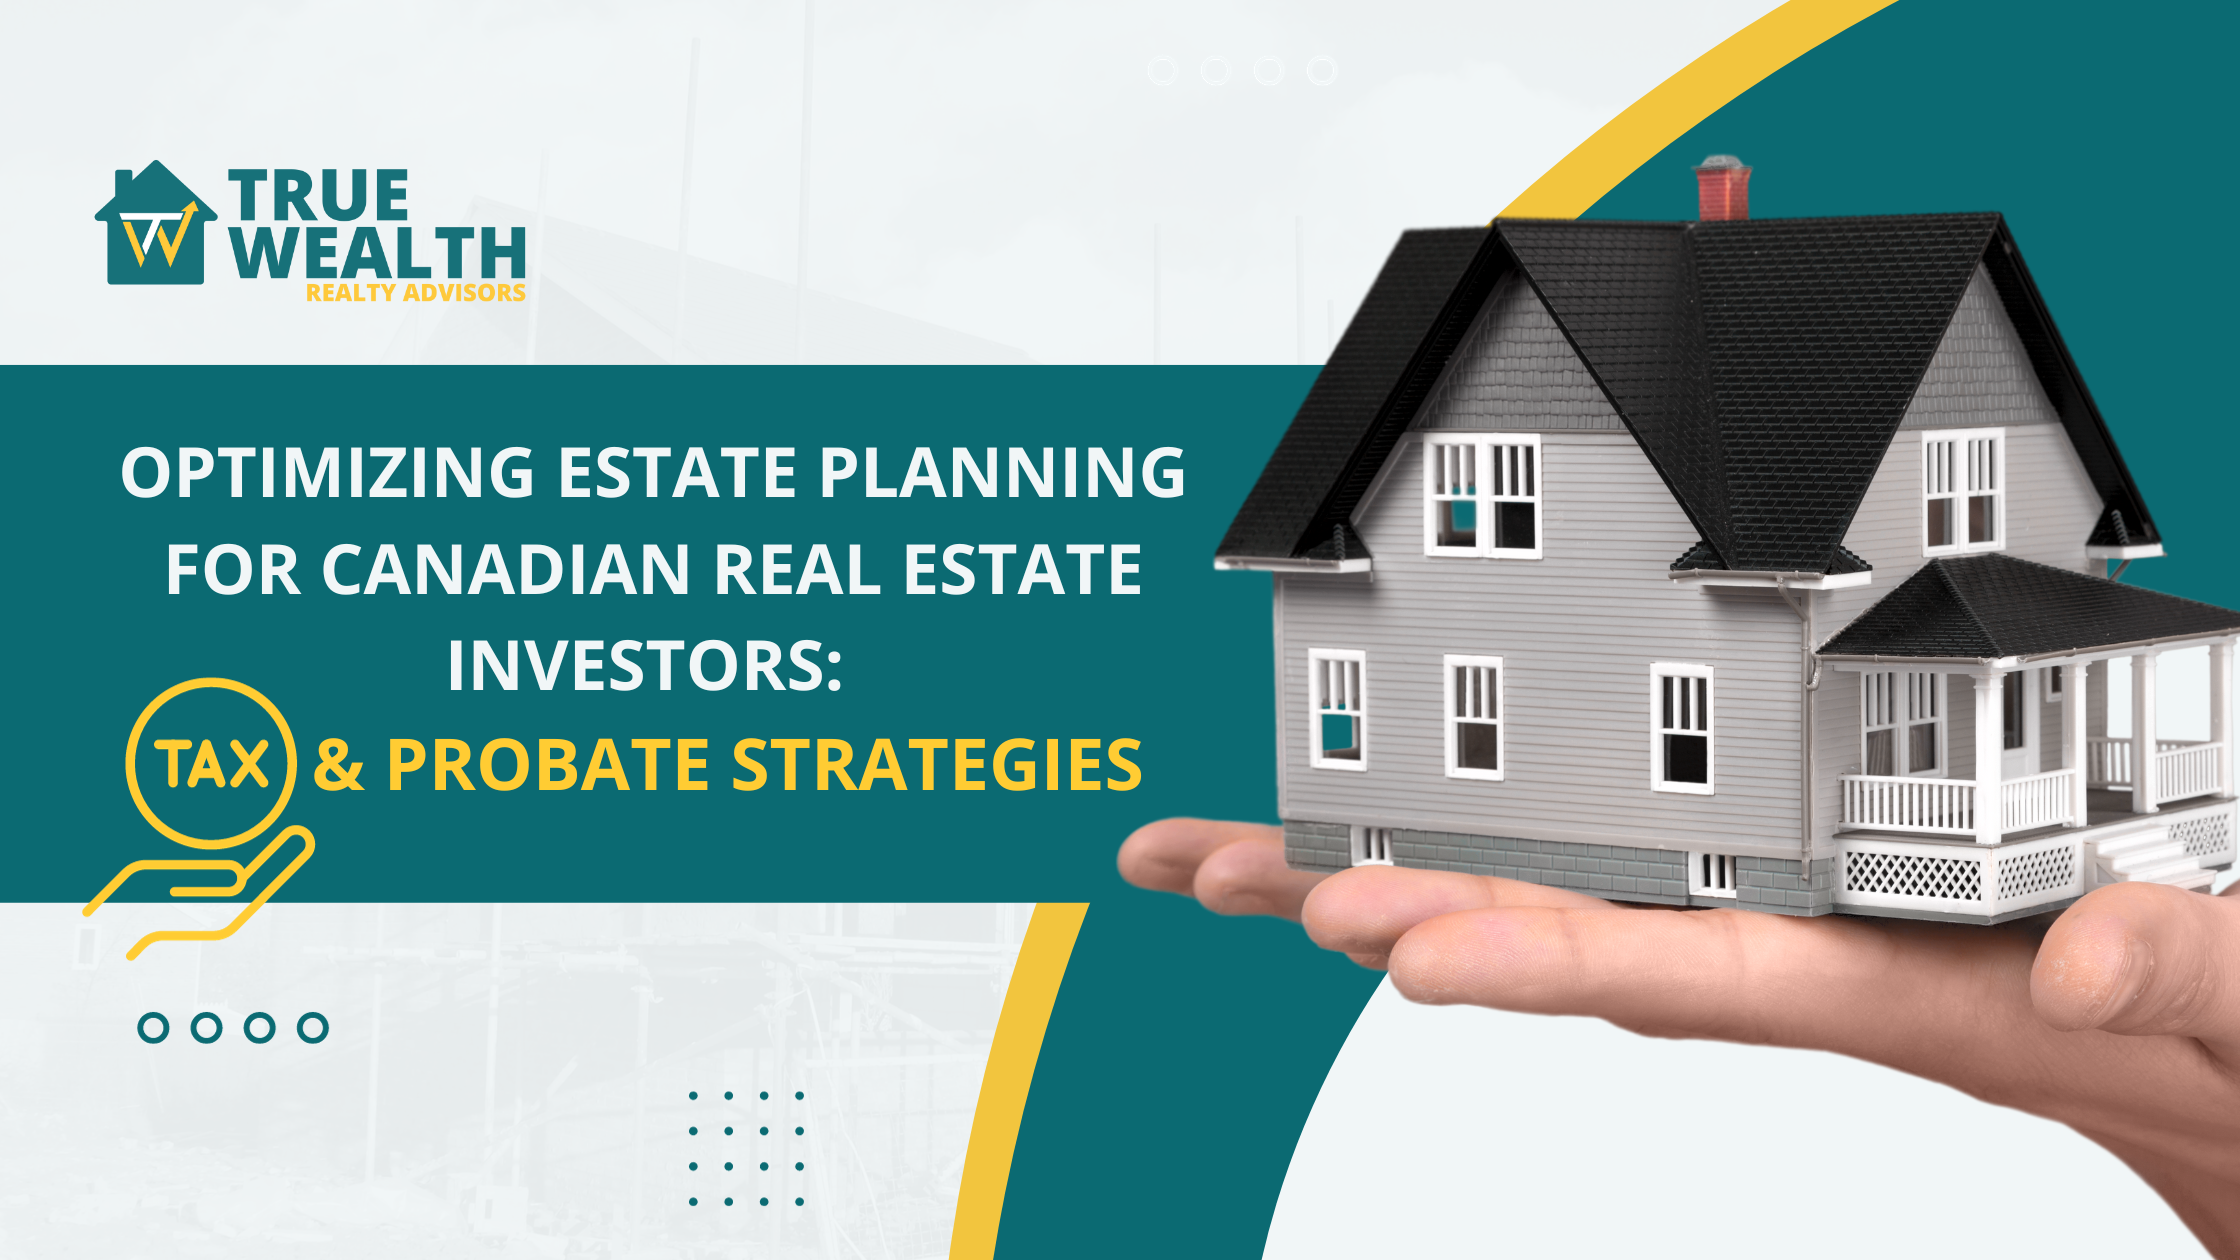 Optimizing Estate Planning for Canadian Real Estate Investors: Tax & probate strategies